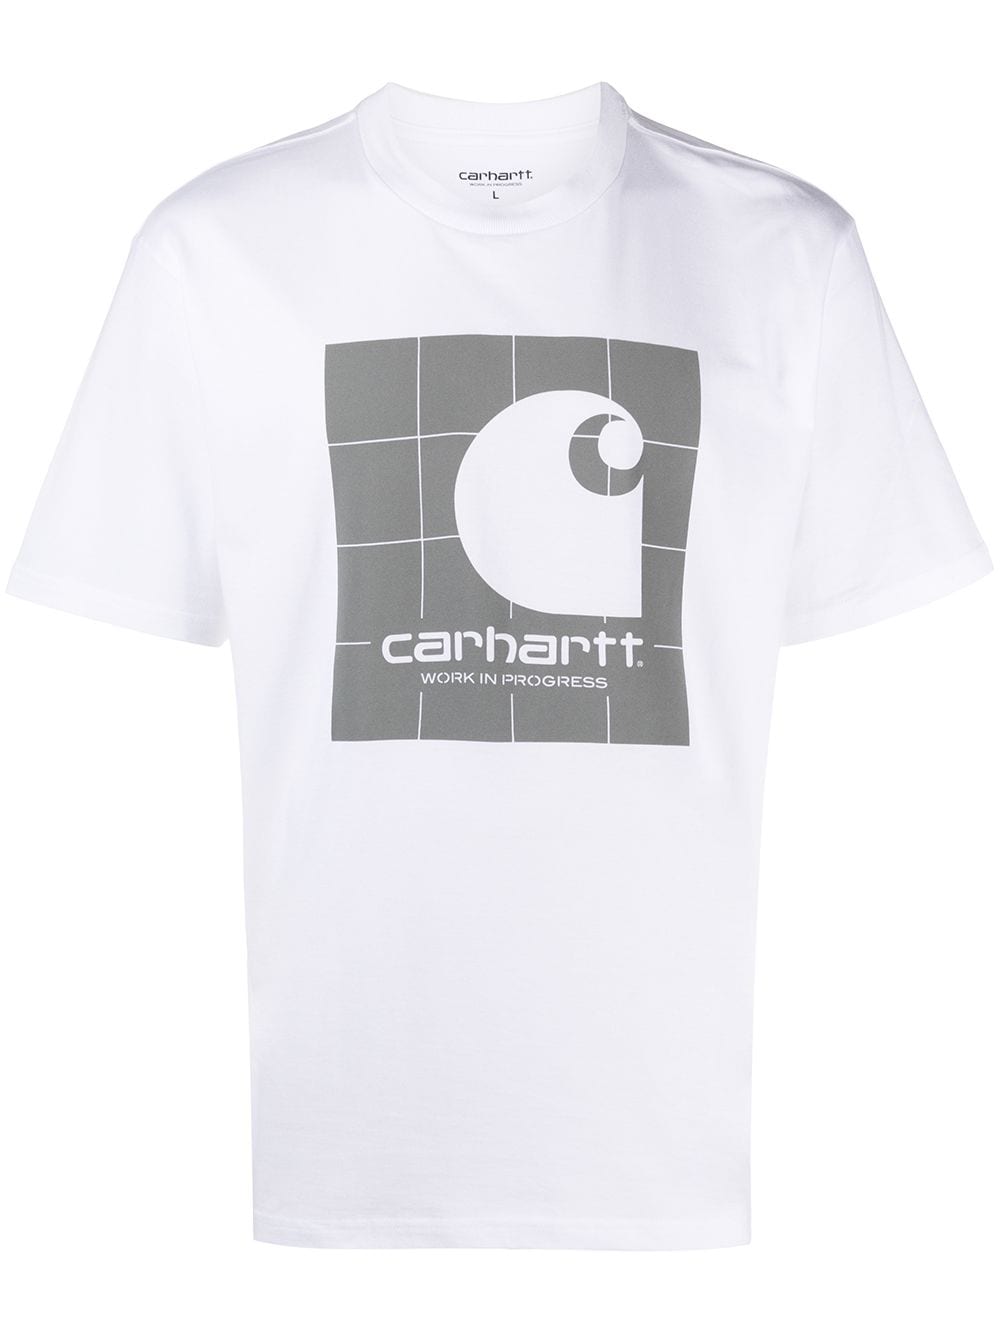 фото Carhartt wip футболка с логотипом